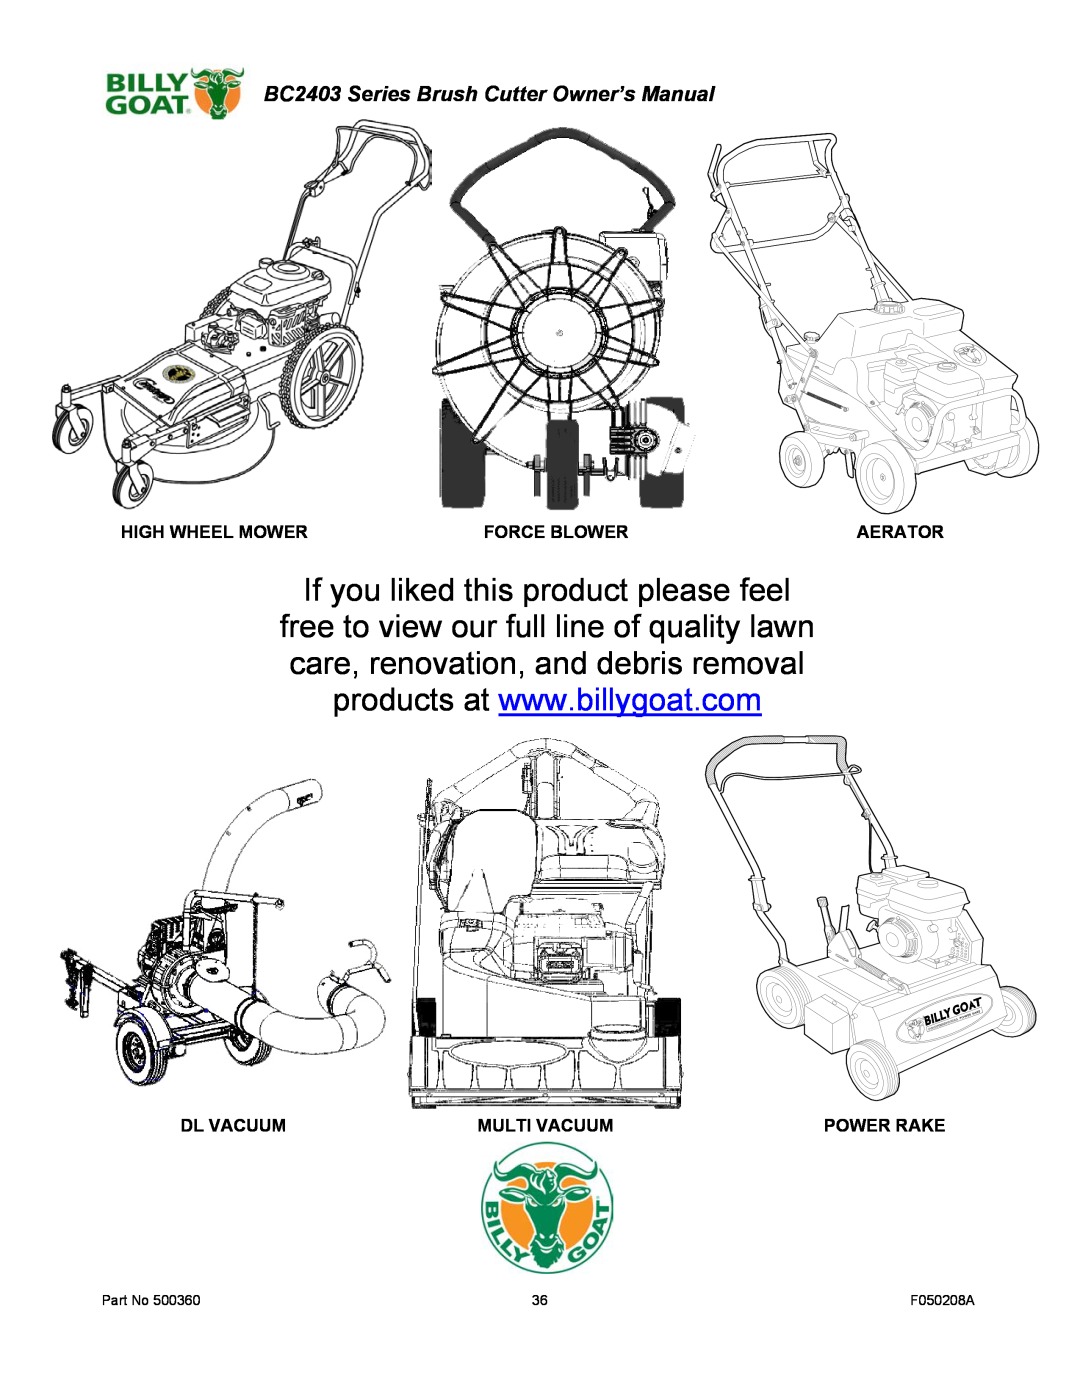 Billy Goat BC2403 Series High Wheel Mower, Force Blower, Aerator, Dl Vacuum, Multi Vacuum, Power Rake, F050208A 